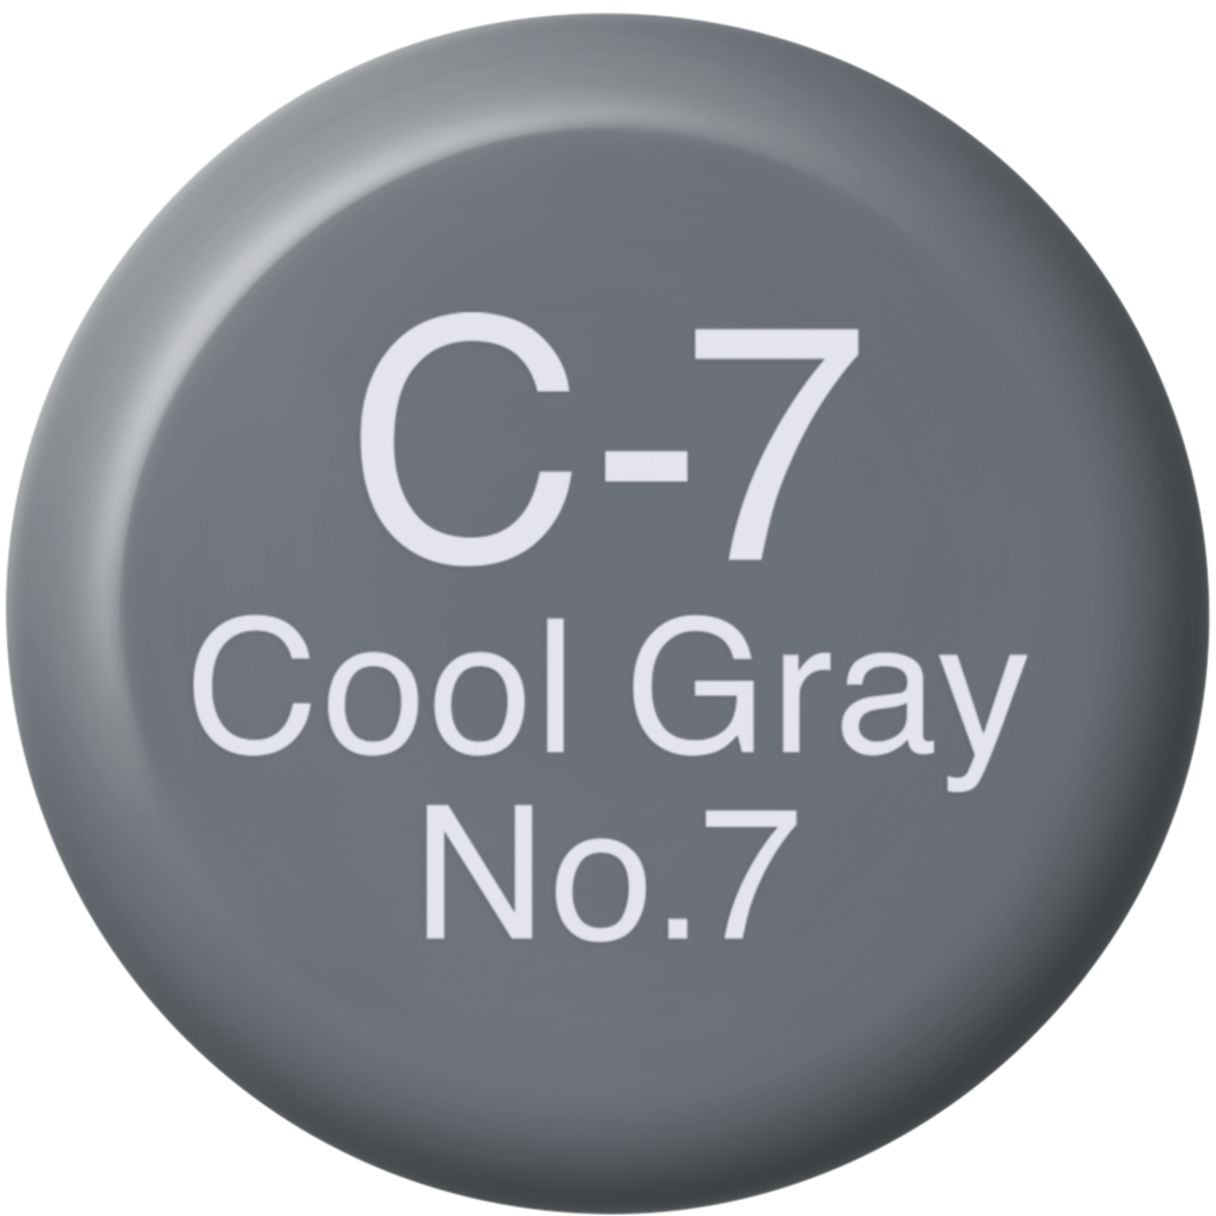 COPIC Ink Refill 2107615 C-7 - Cool Grey No.7